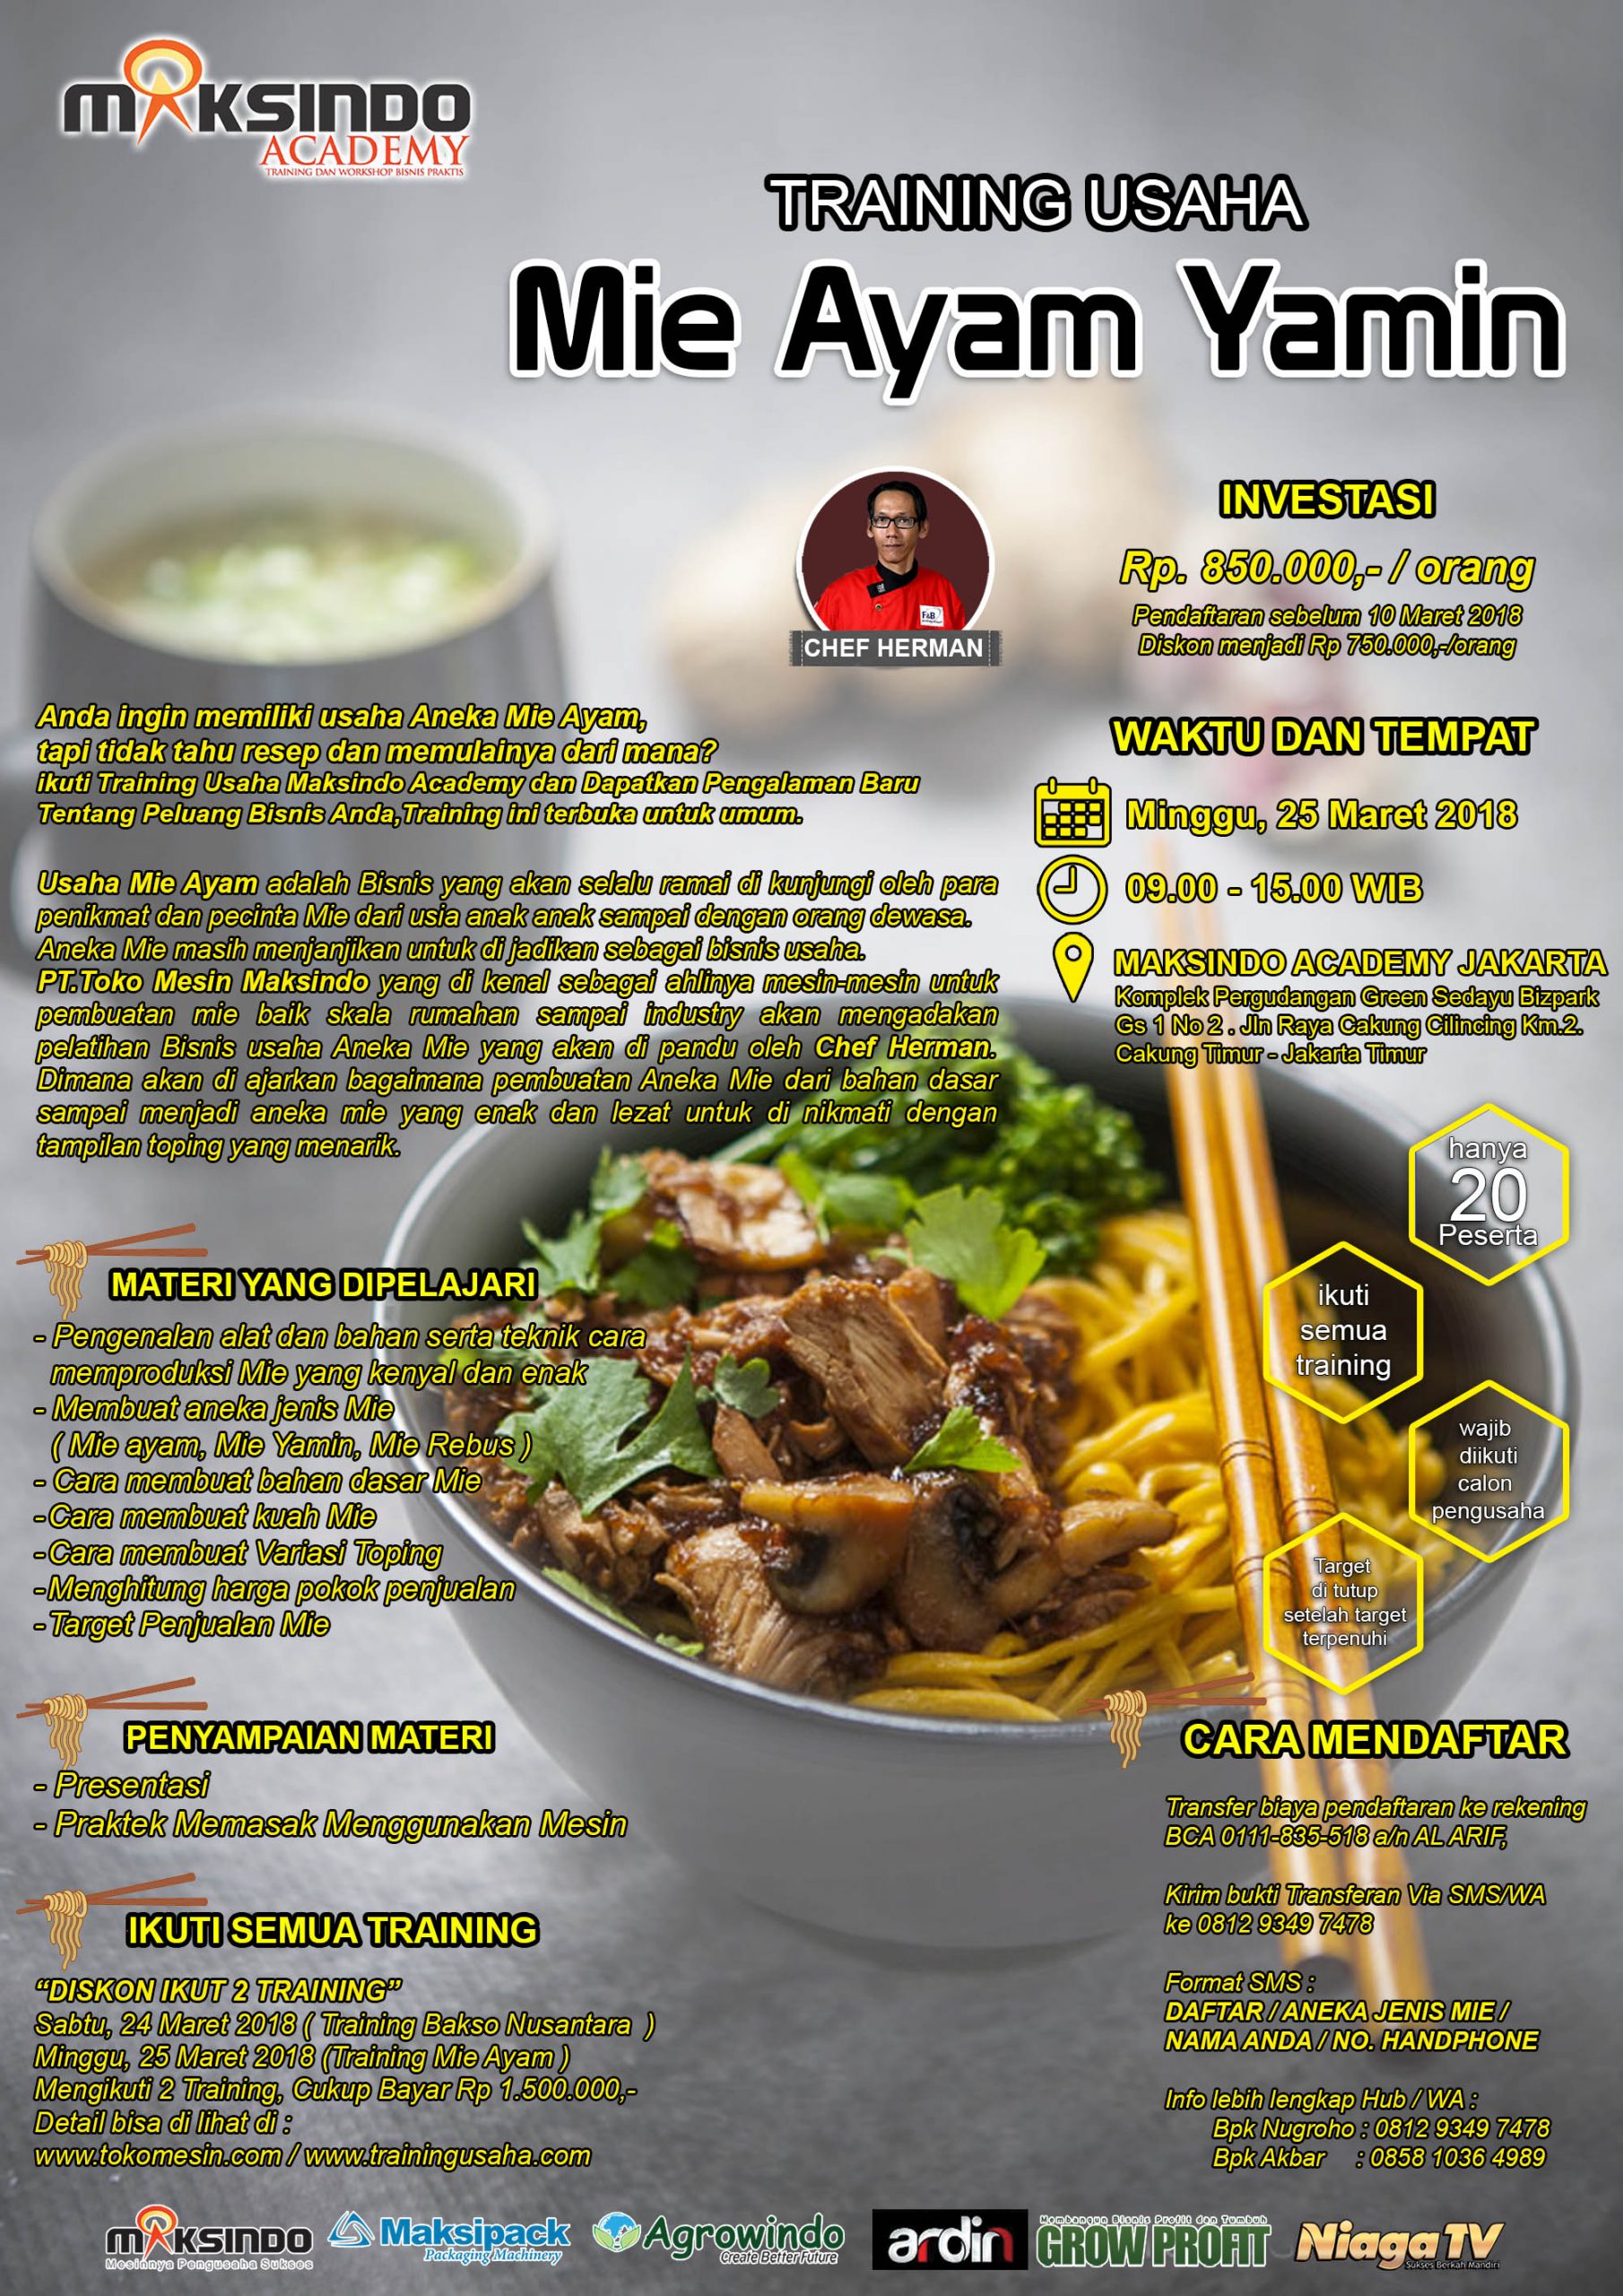 Training Usaha Mie Ayam Yamin, 25 Maret 2018